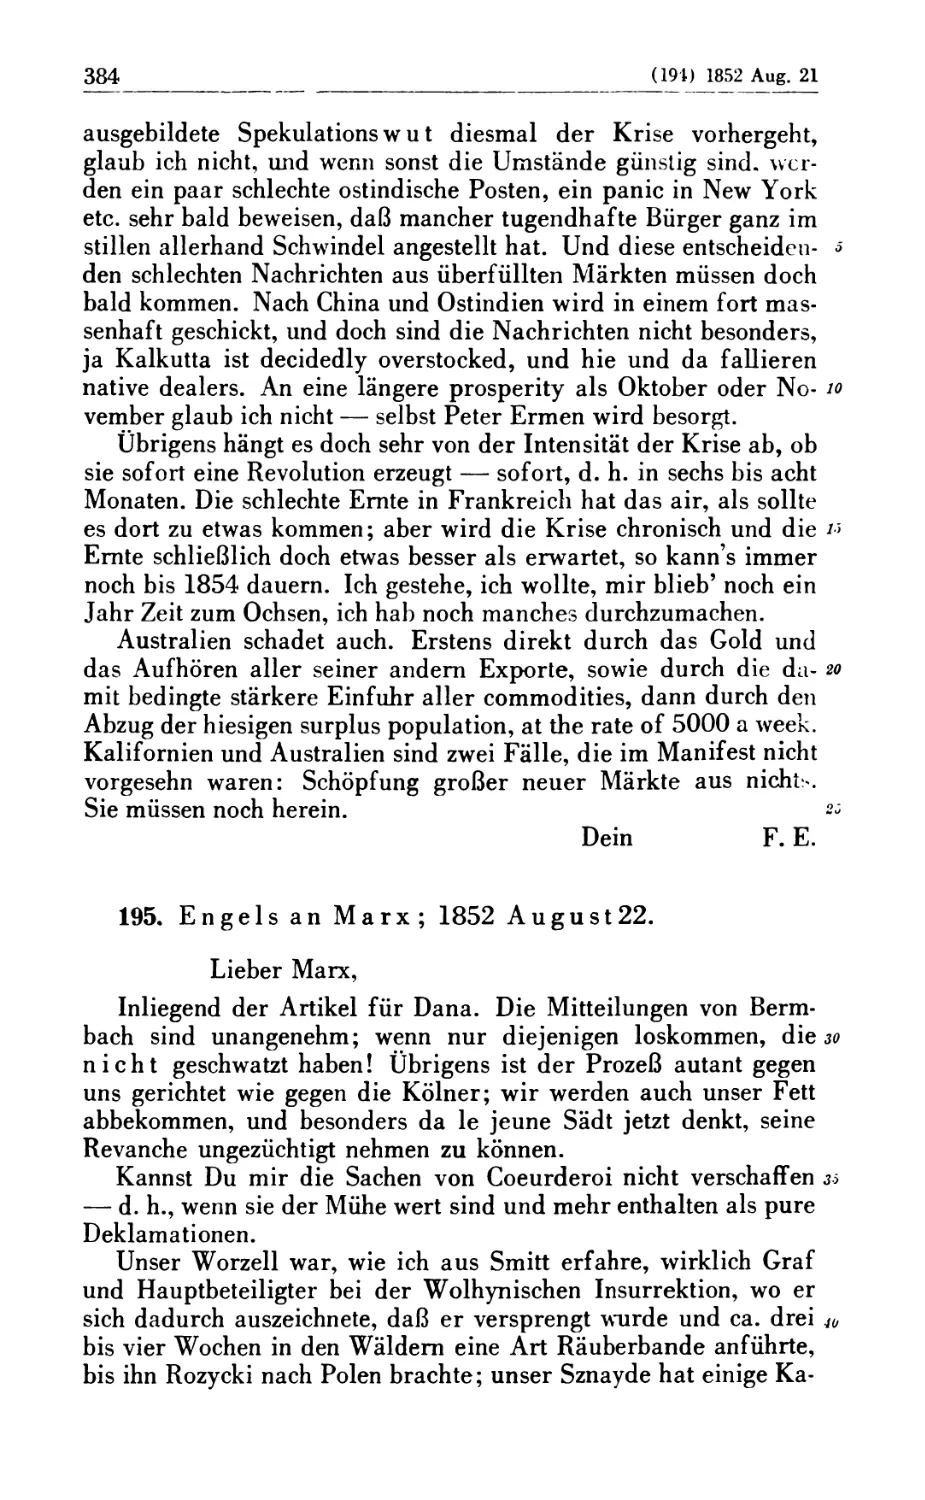 195. Engels an Marx; 1852 August 22